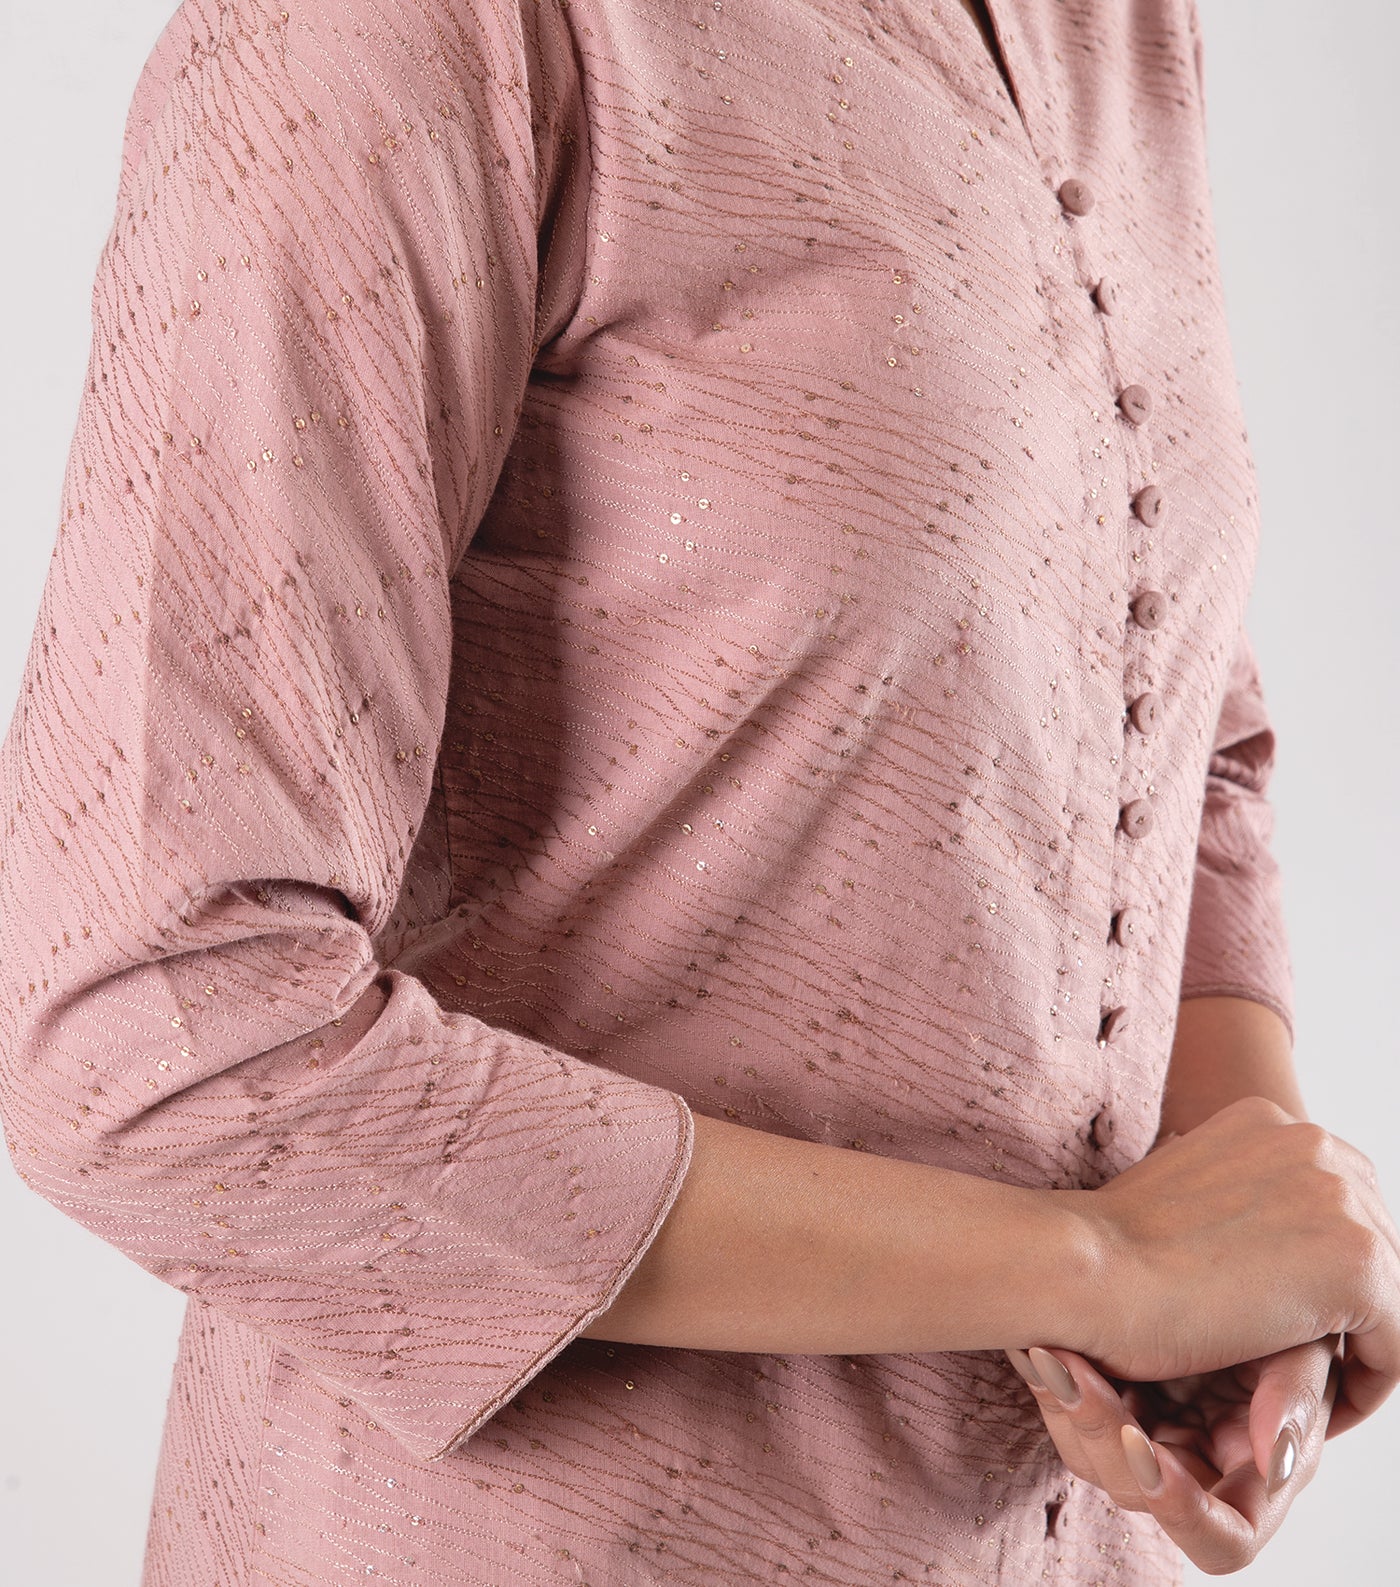 Pink embroidered linen kurta